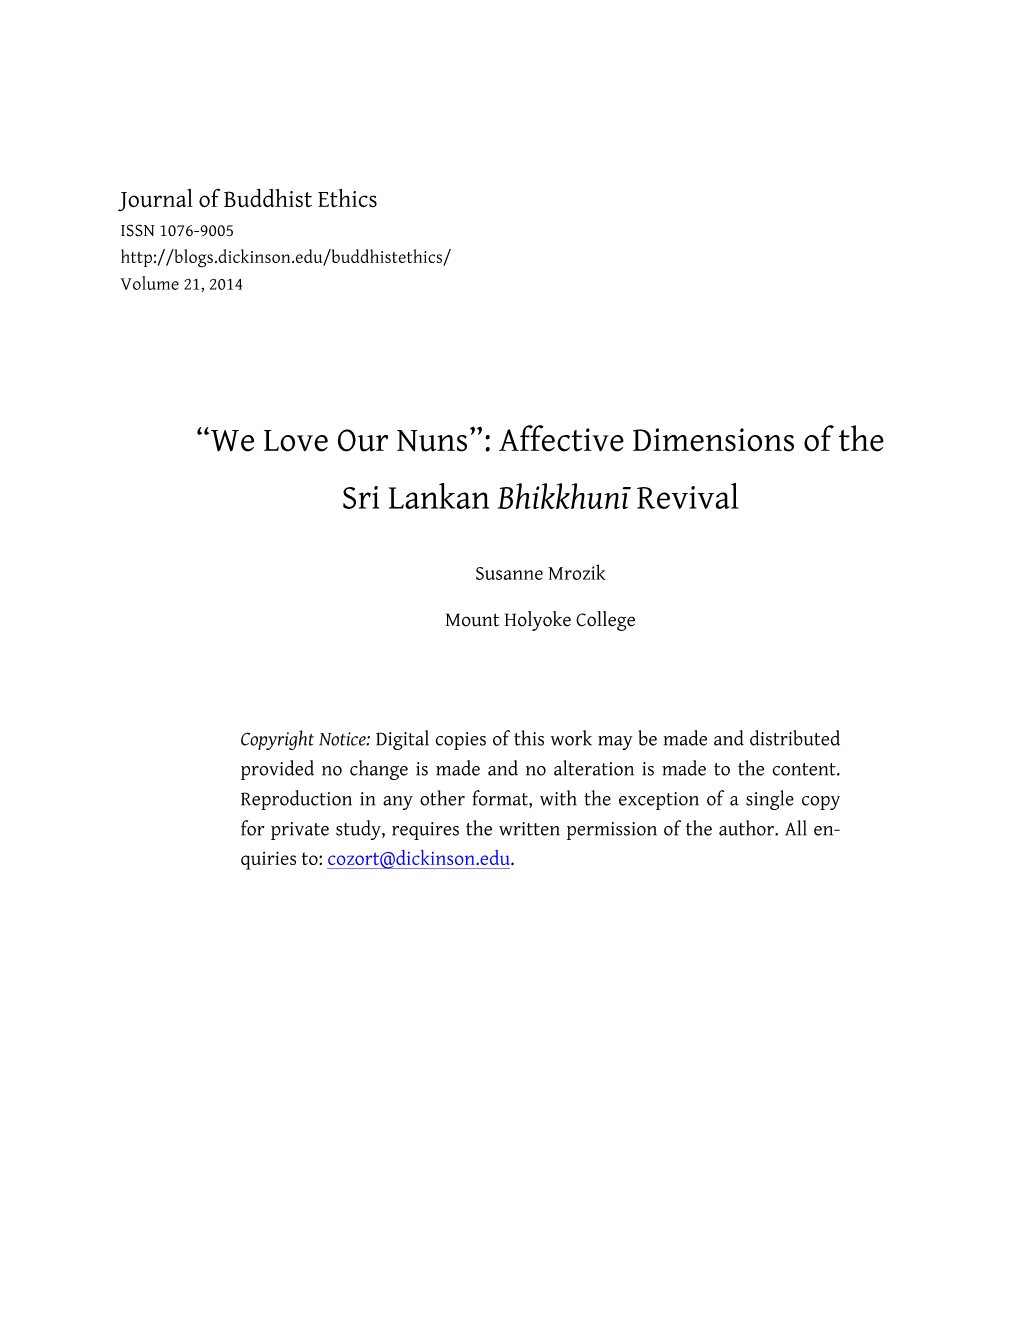 “We Love Our Nuns”: Affective Dimensions of the Sri Lankan Bhikkhunī Revival